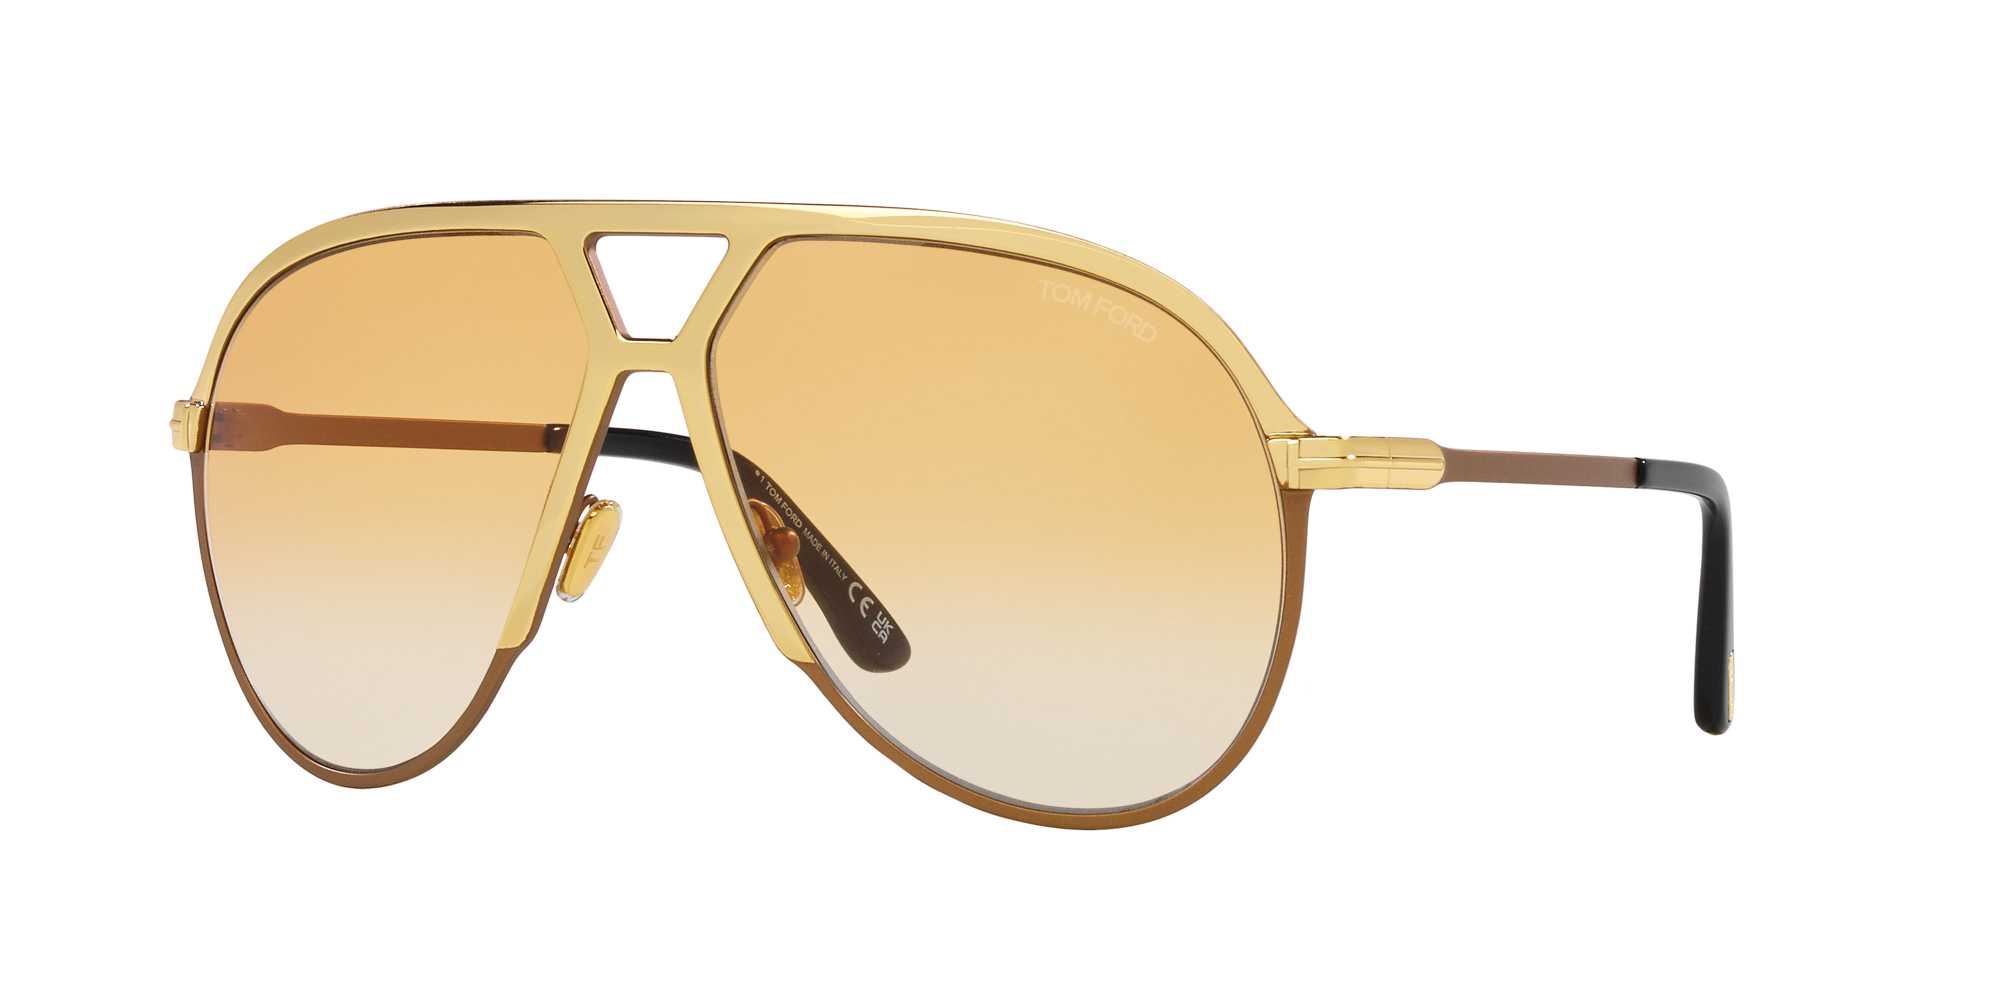 Miu Miu MU 11YS 55 Grey Gradient & Black Sunglasses | Sunglass Hut USA